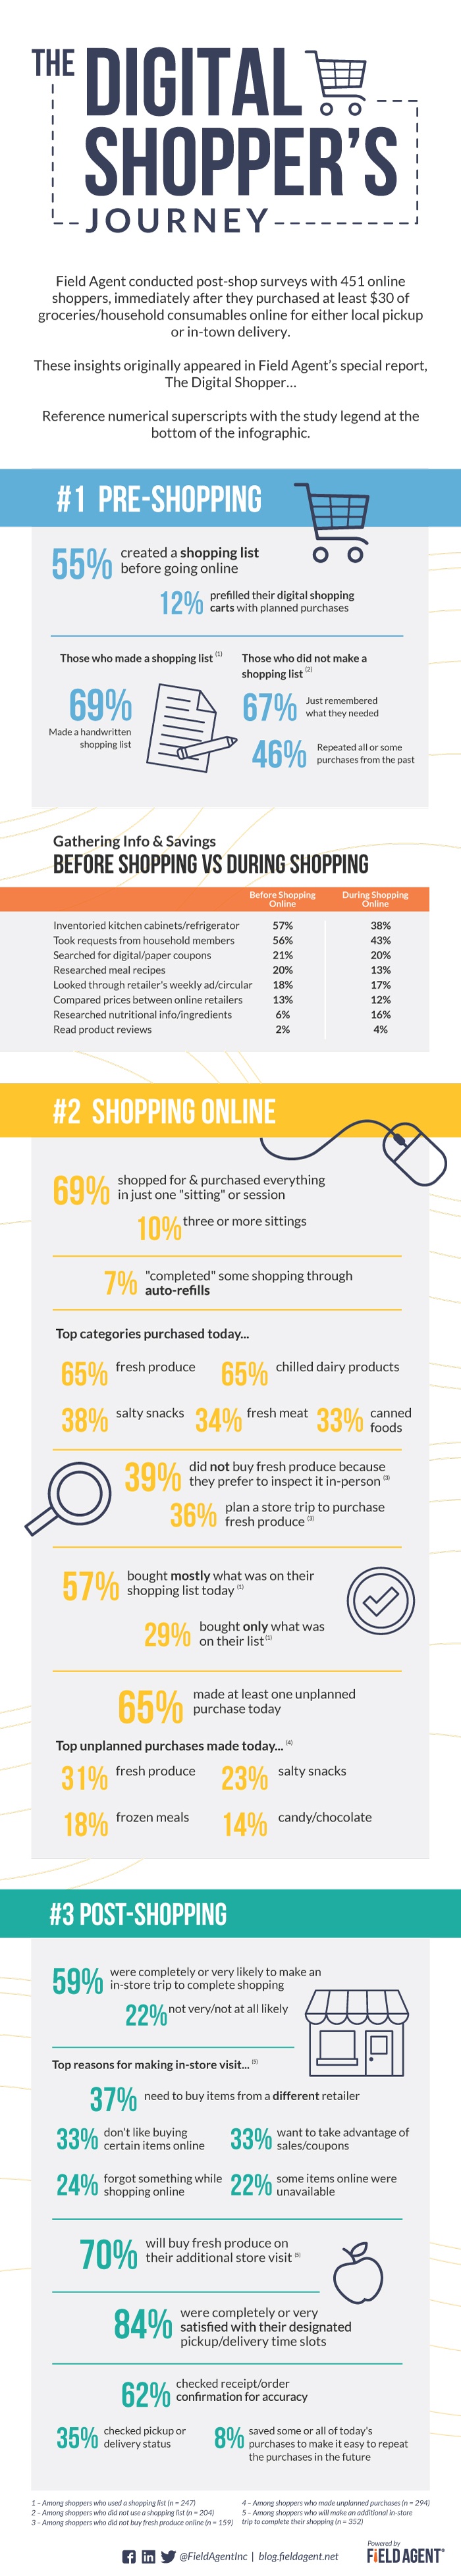 The Digital Shopper's Journey: Infographic